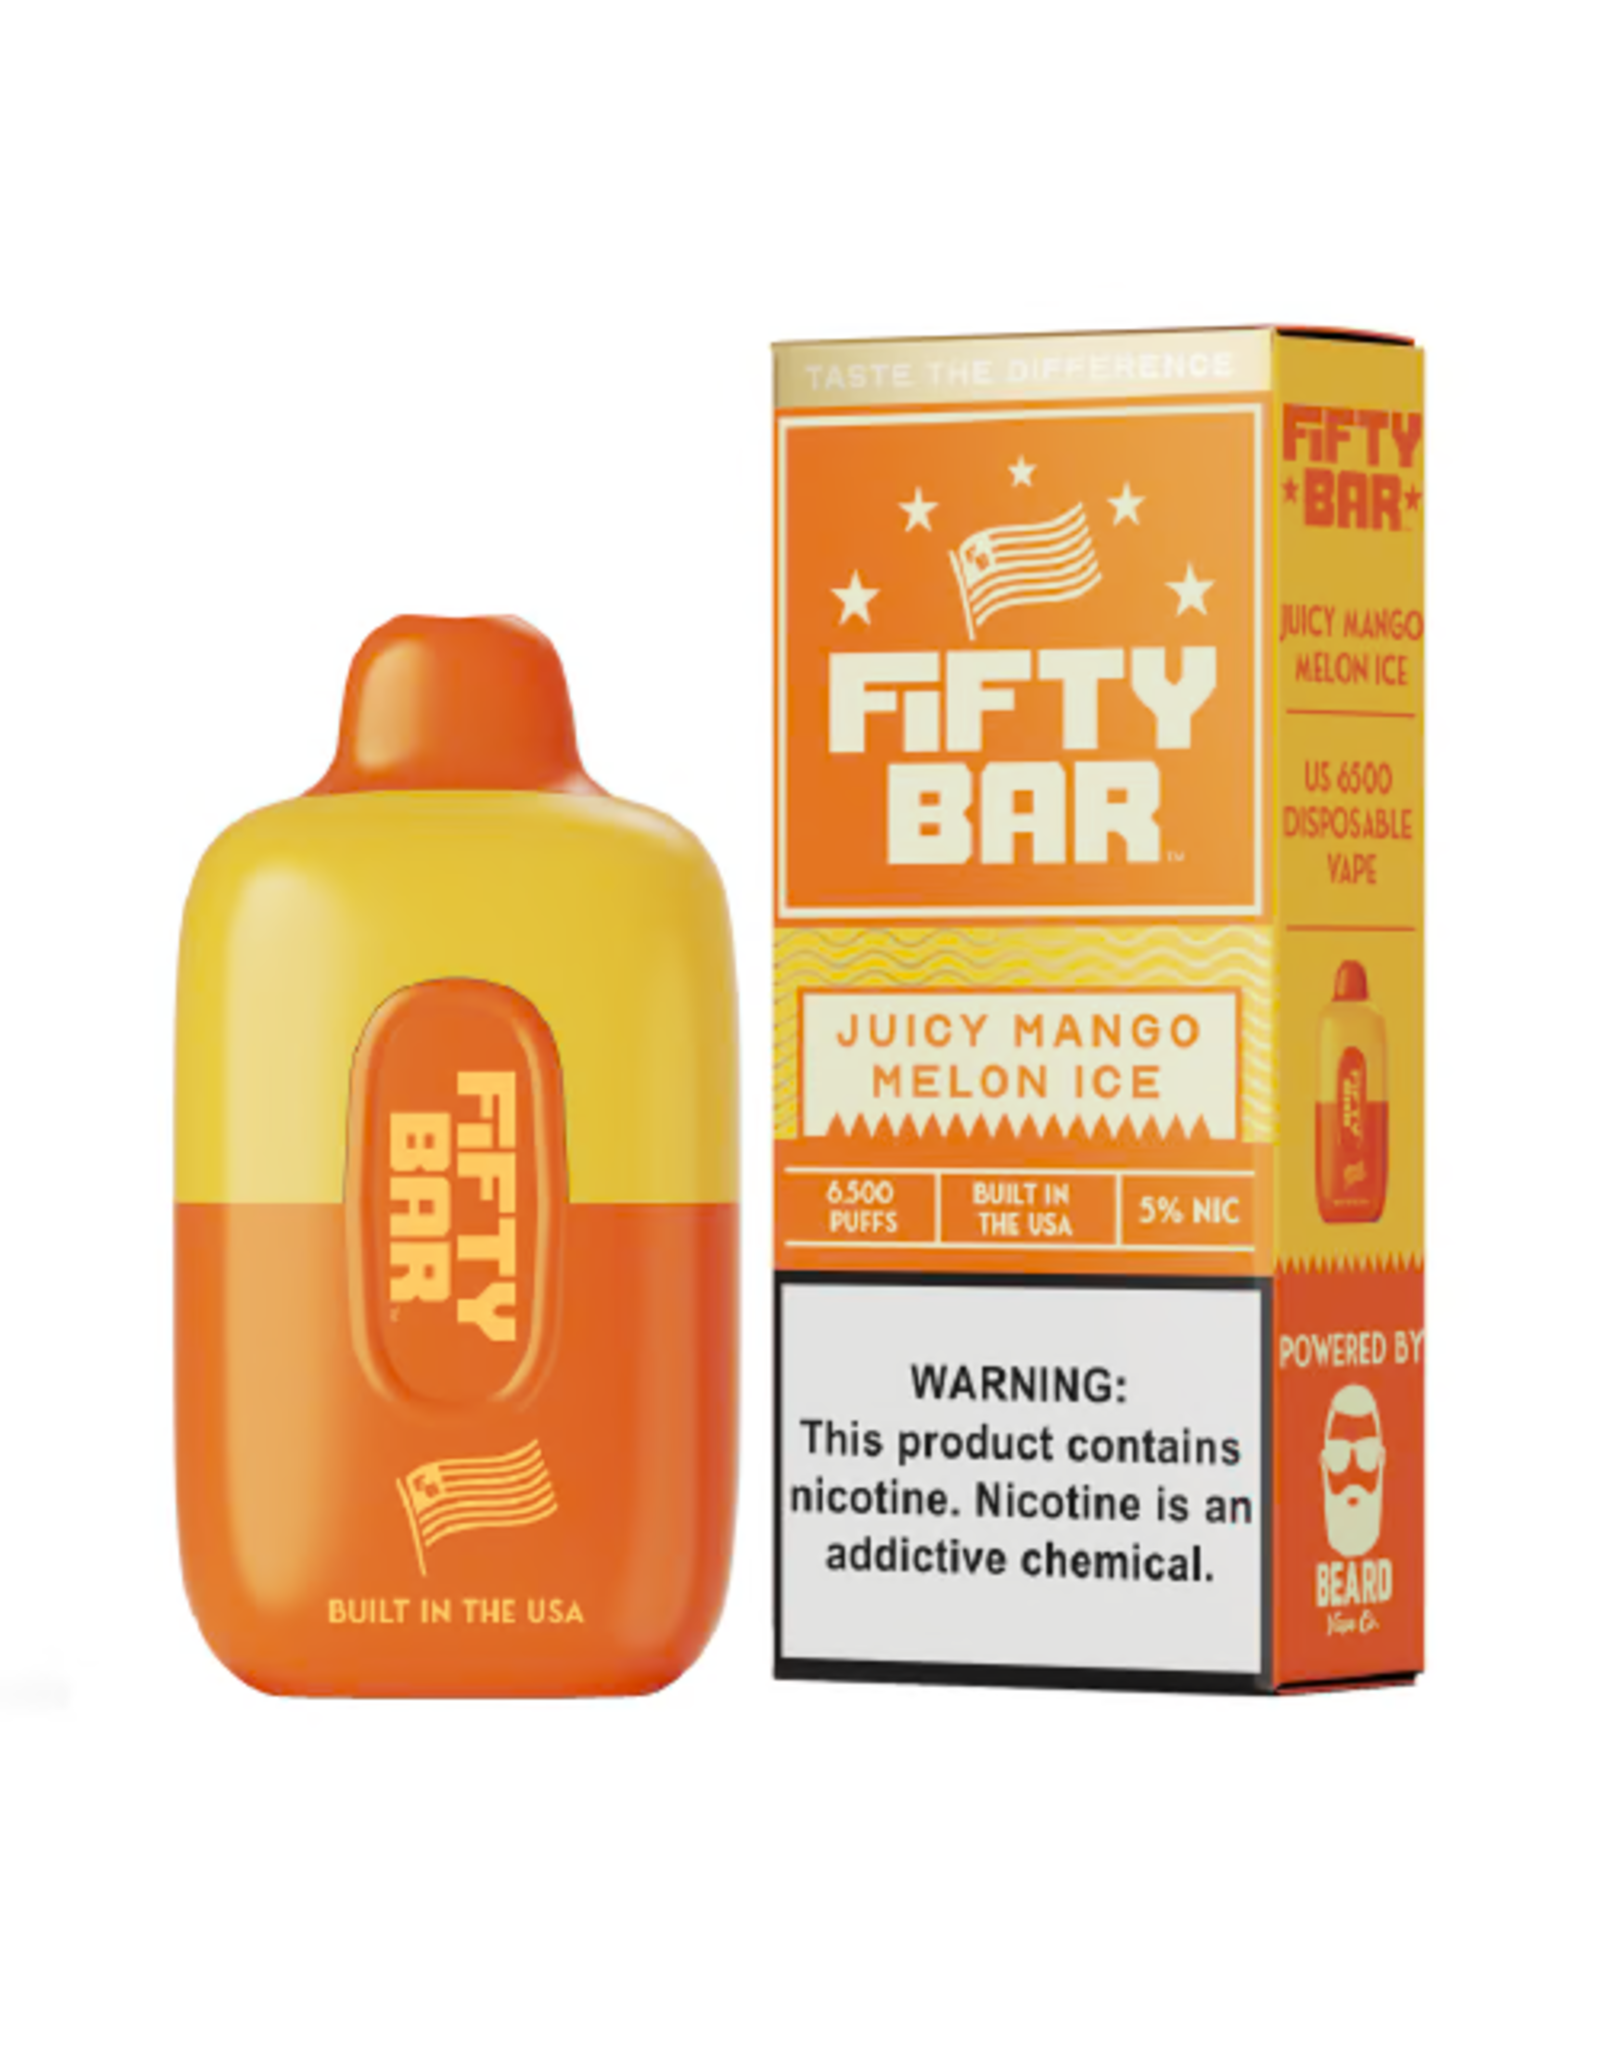 Fifty Bar Fifty Bar 6500 - Juicy Mango Melon Ice